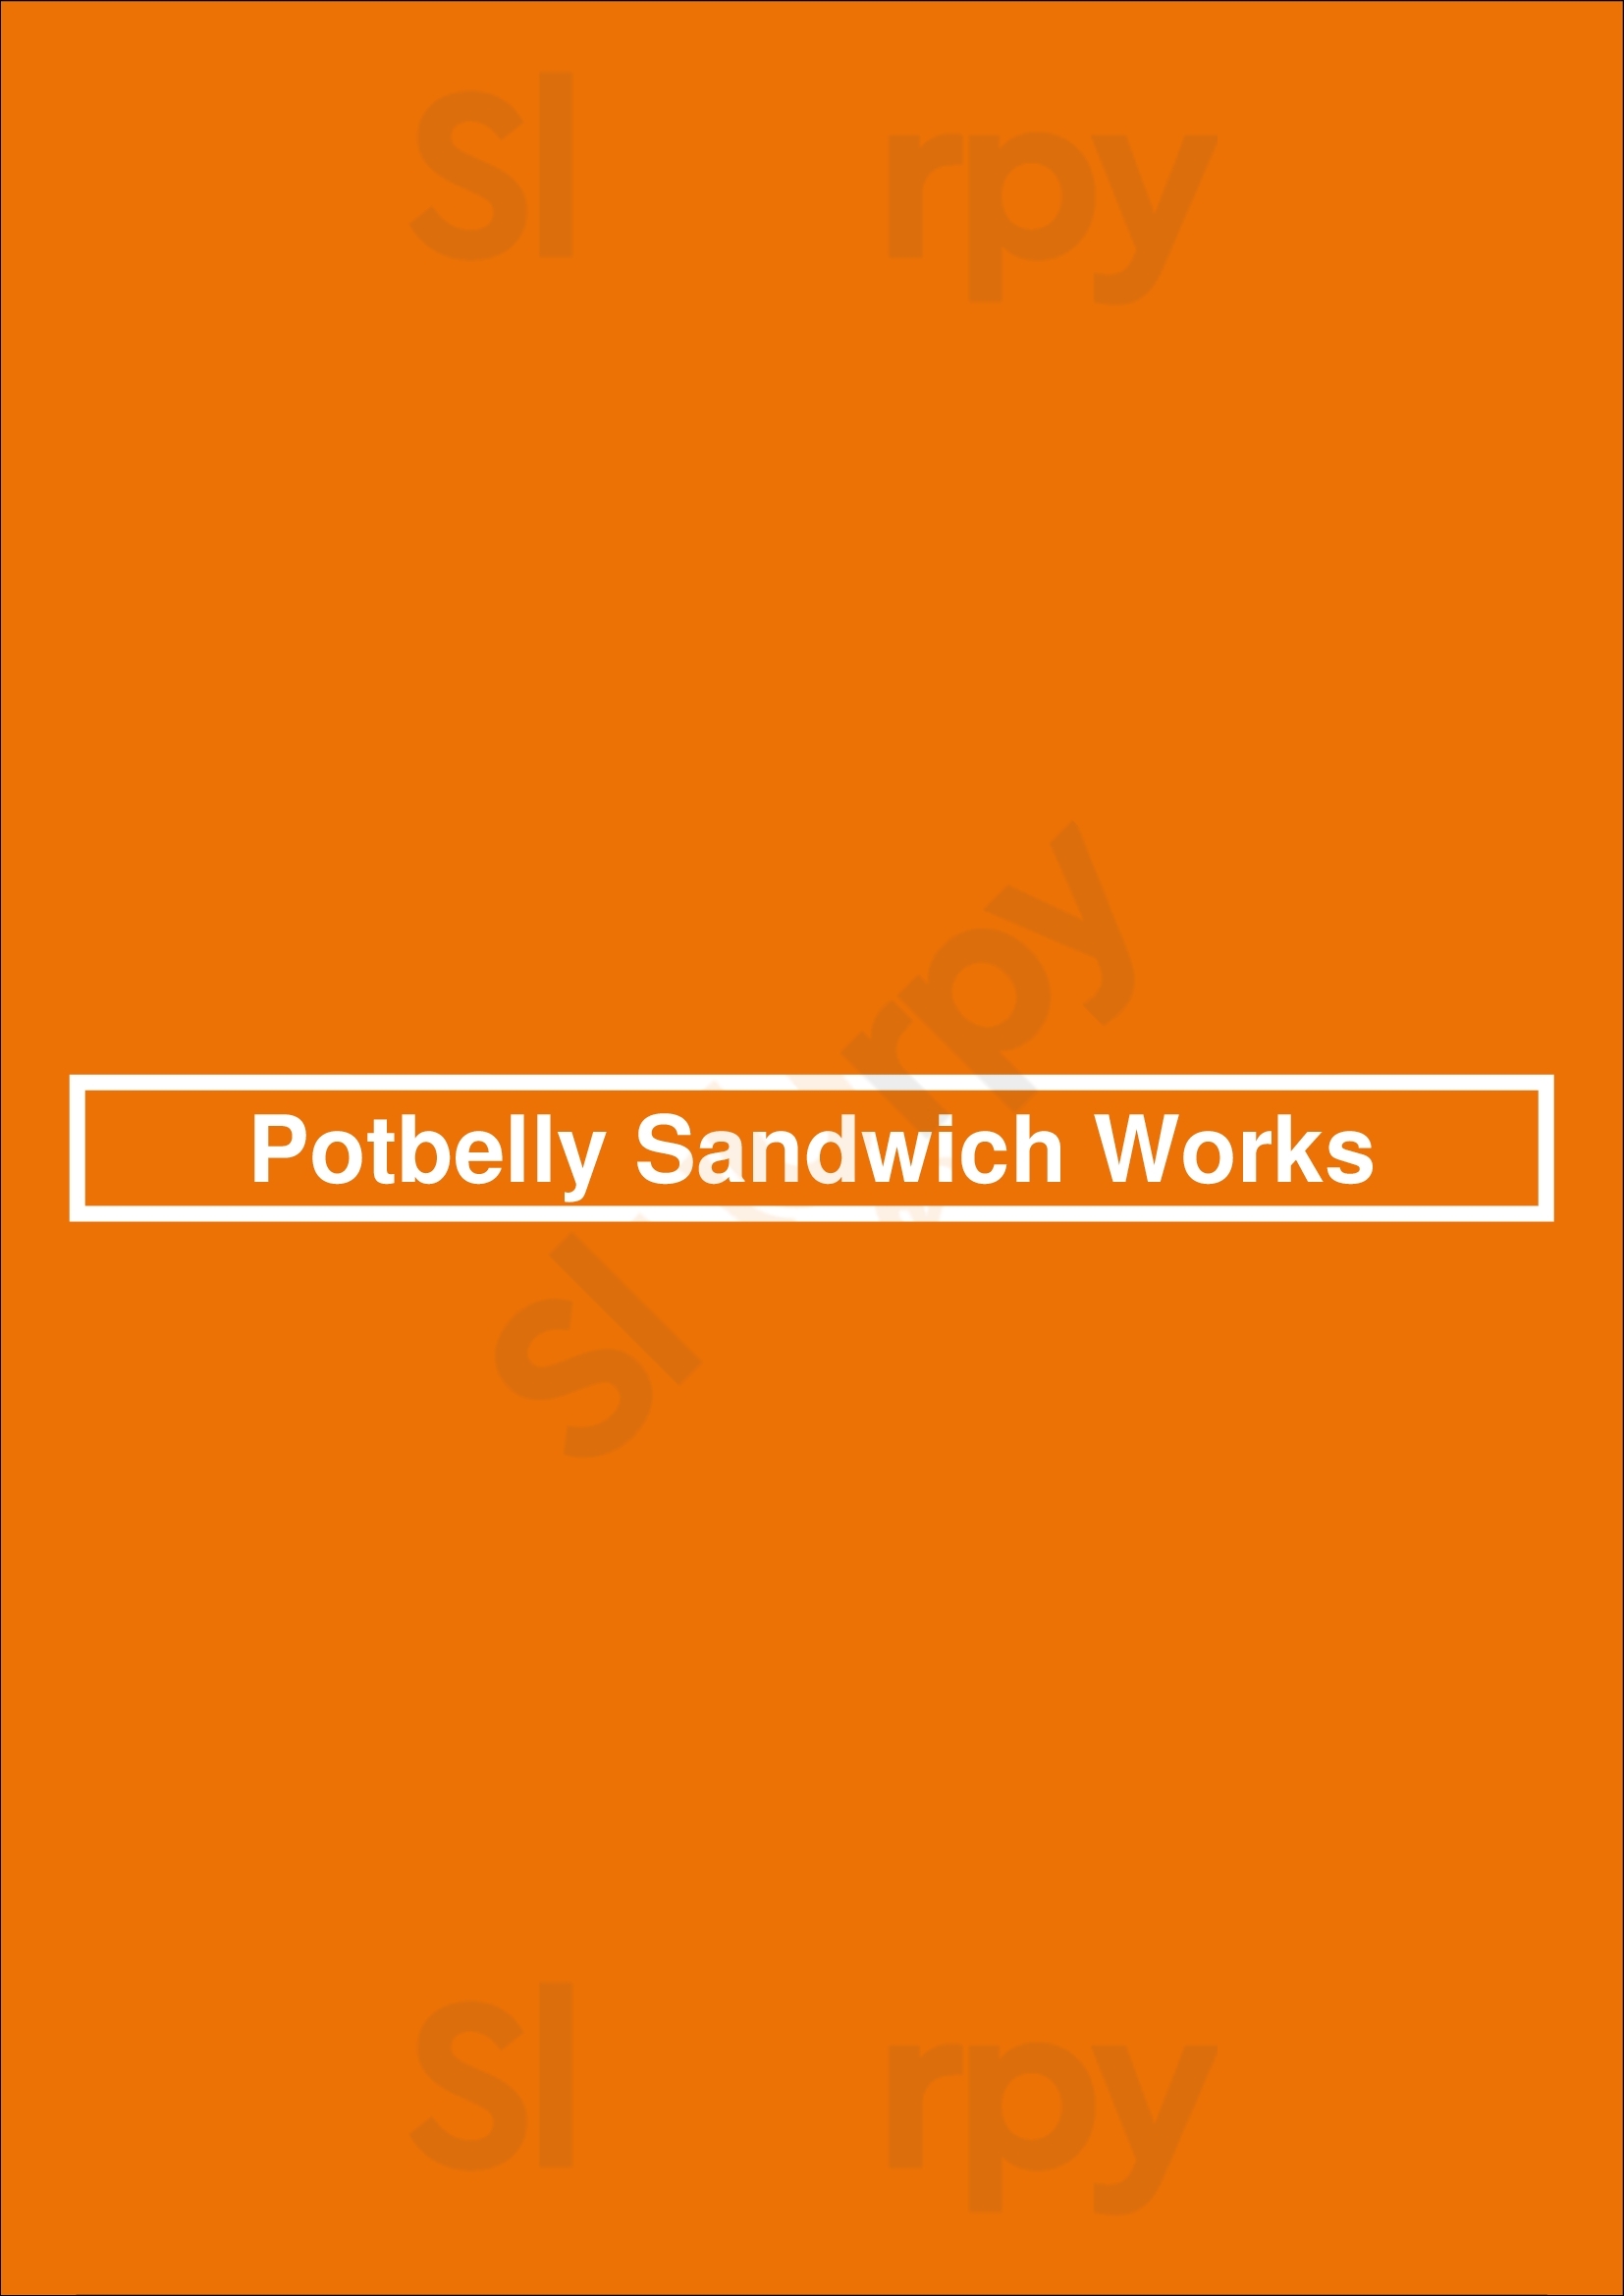 Potbelly Sandwich Shop Brookfield Menu - 1